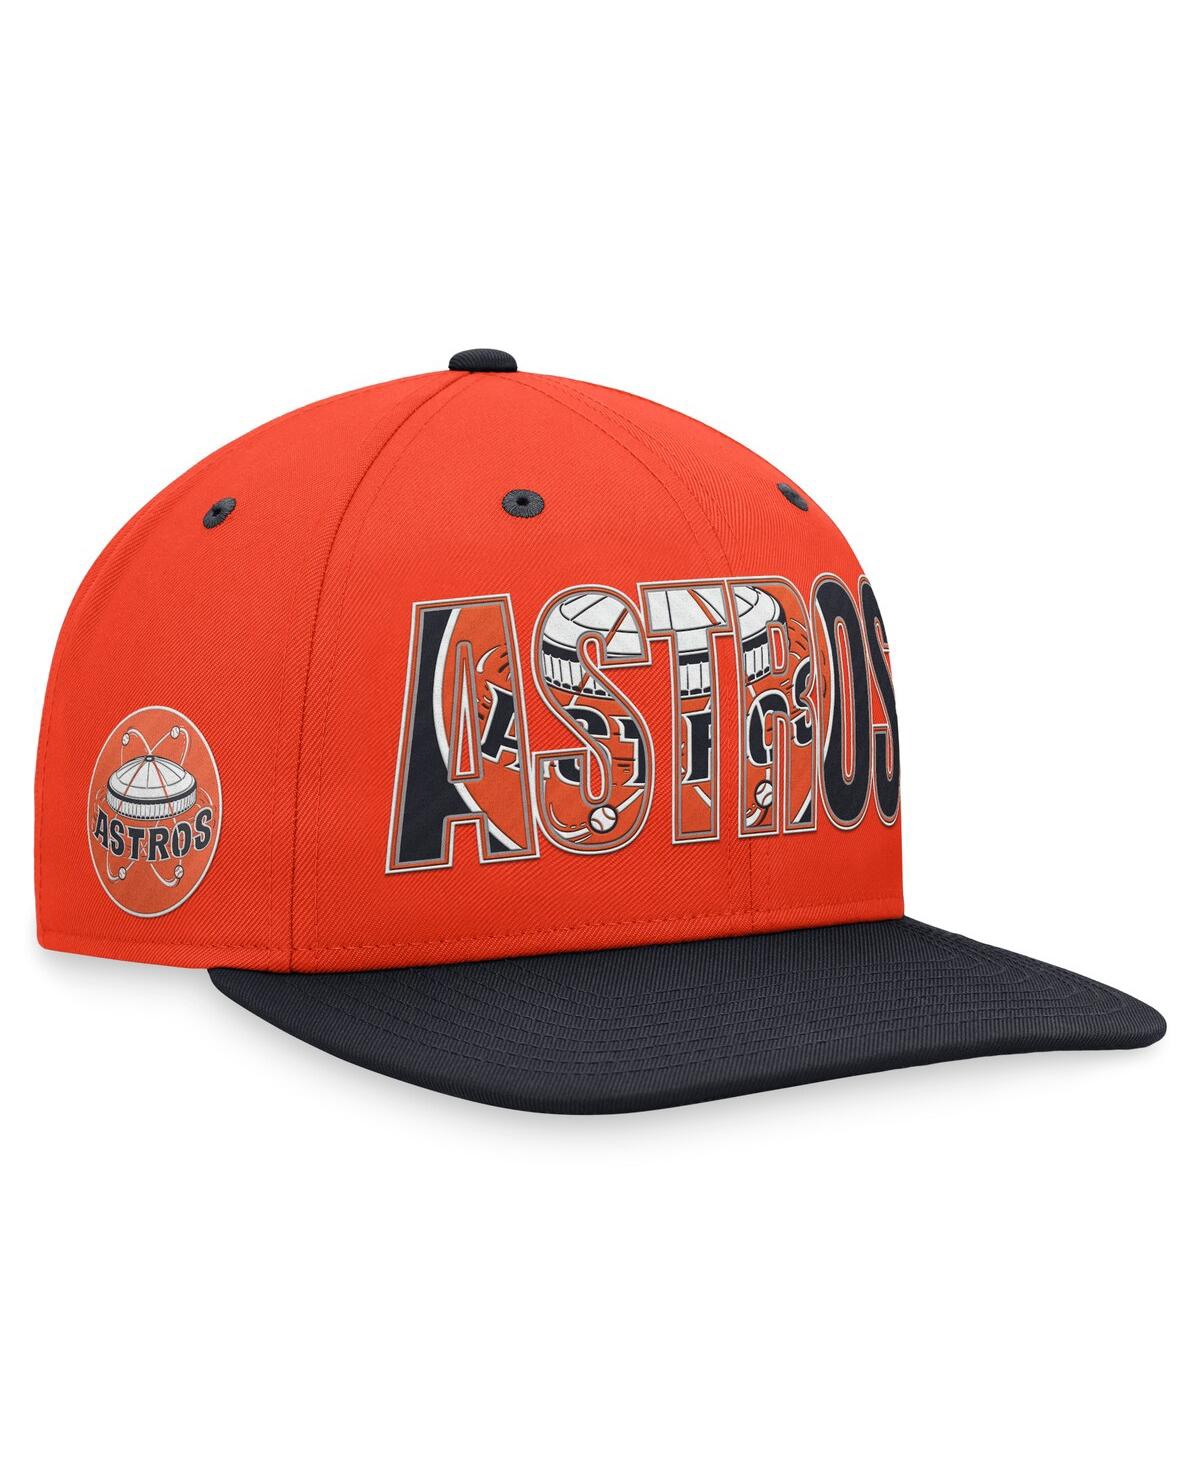 Shop Nike Men's  Orange Houston Astros Cooperstown Collection Pro Snapback Hat